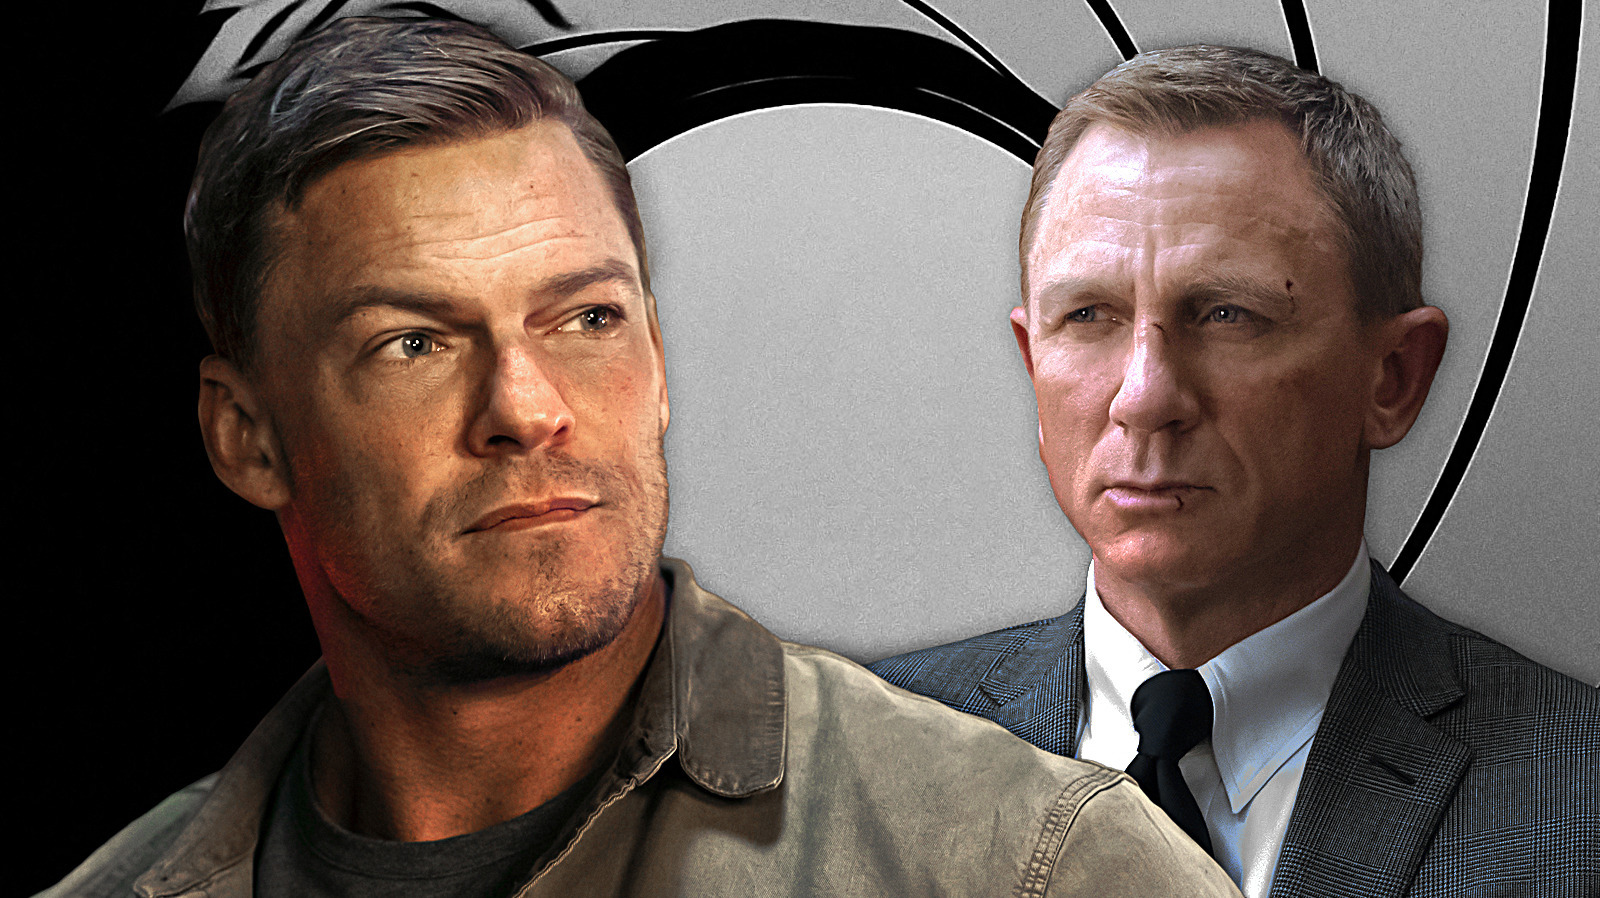 Exclusive: Reacher Star Alan Ritchson Reveals His Top Two Critiques of James Bond